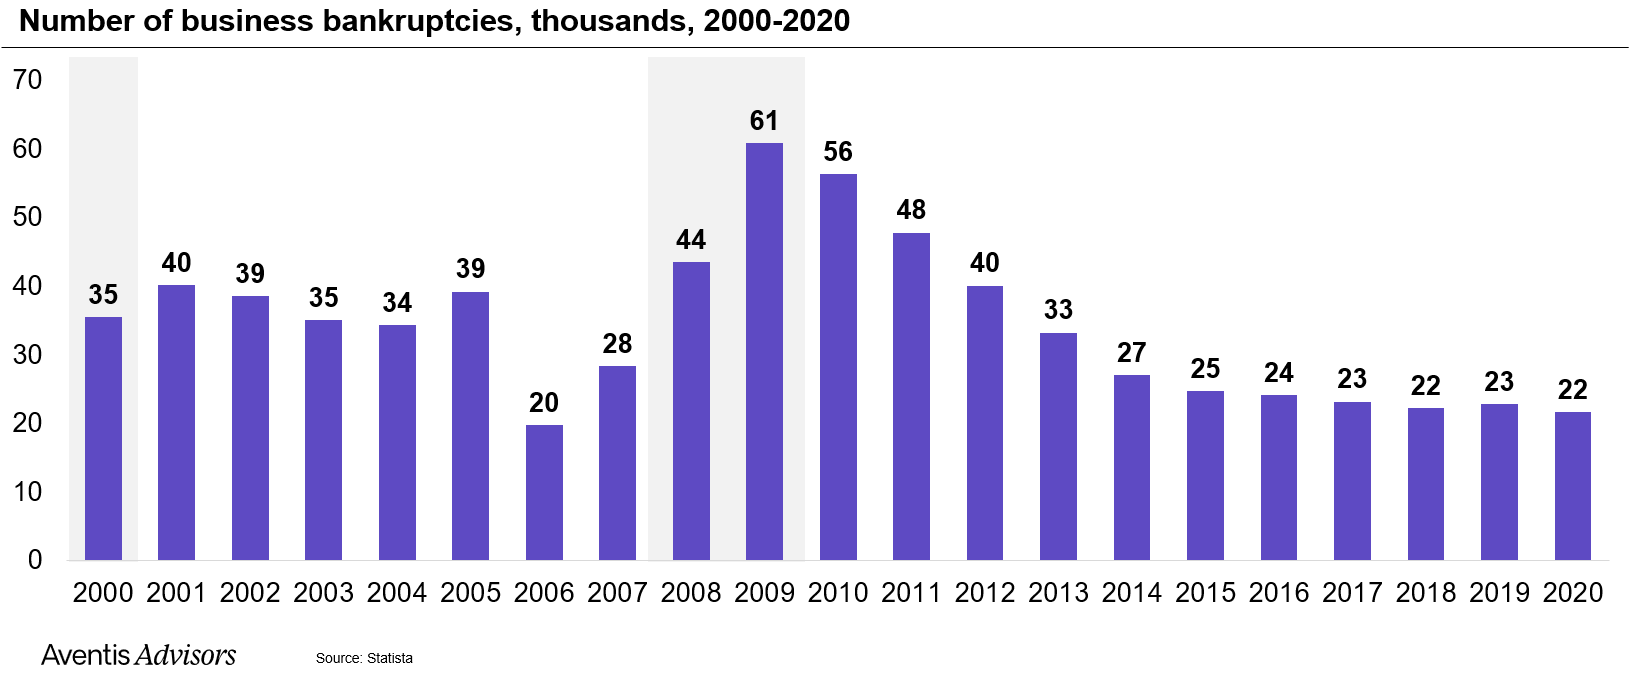 Number of business bankruptcies, 2000-2020